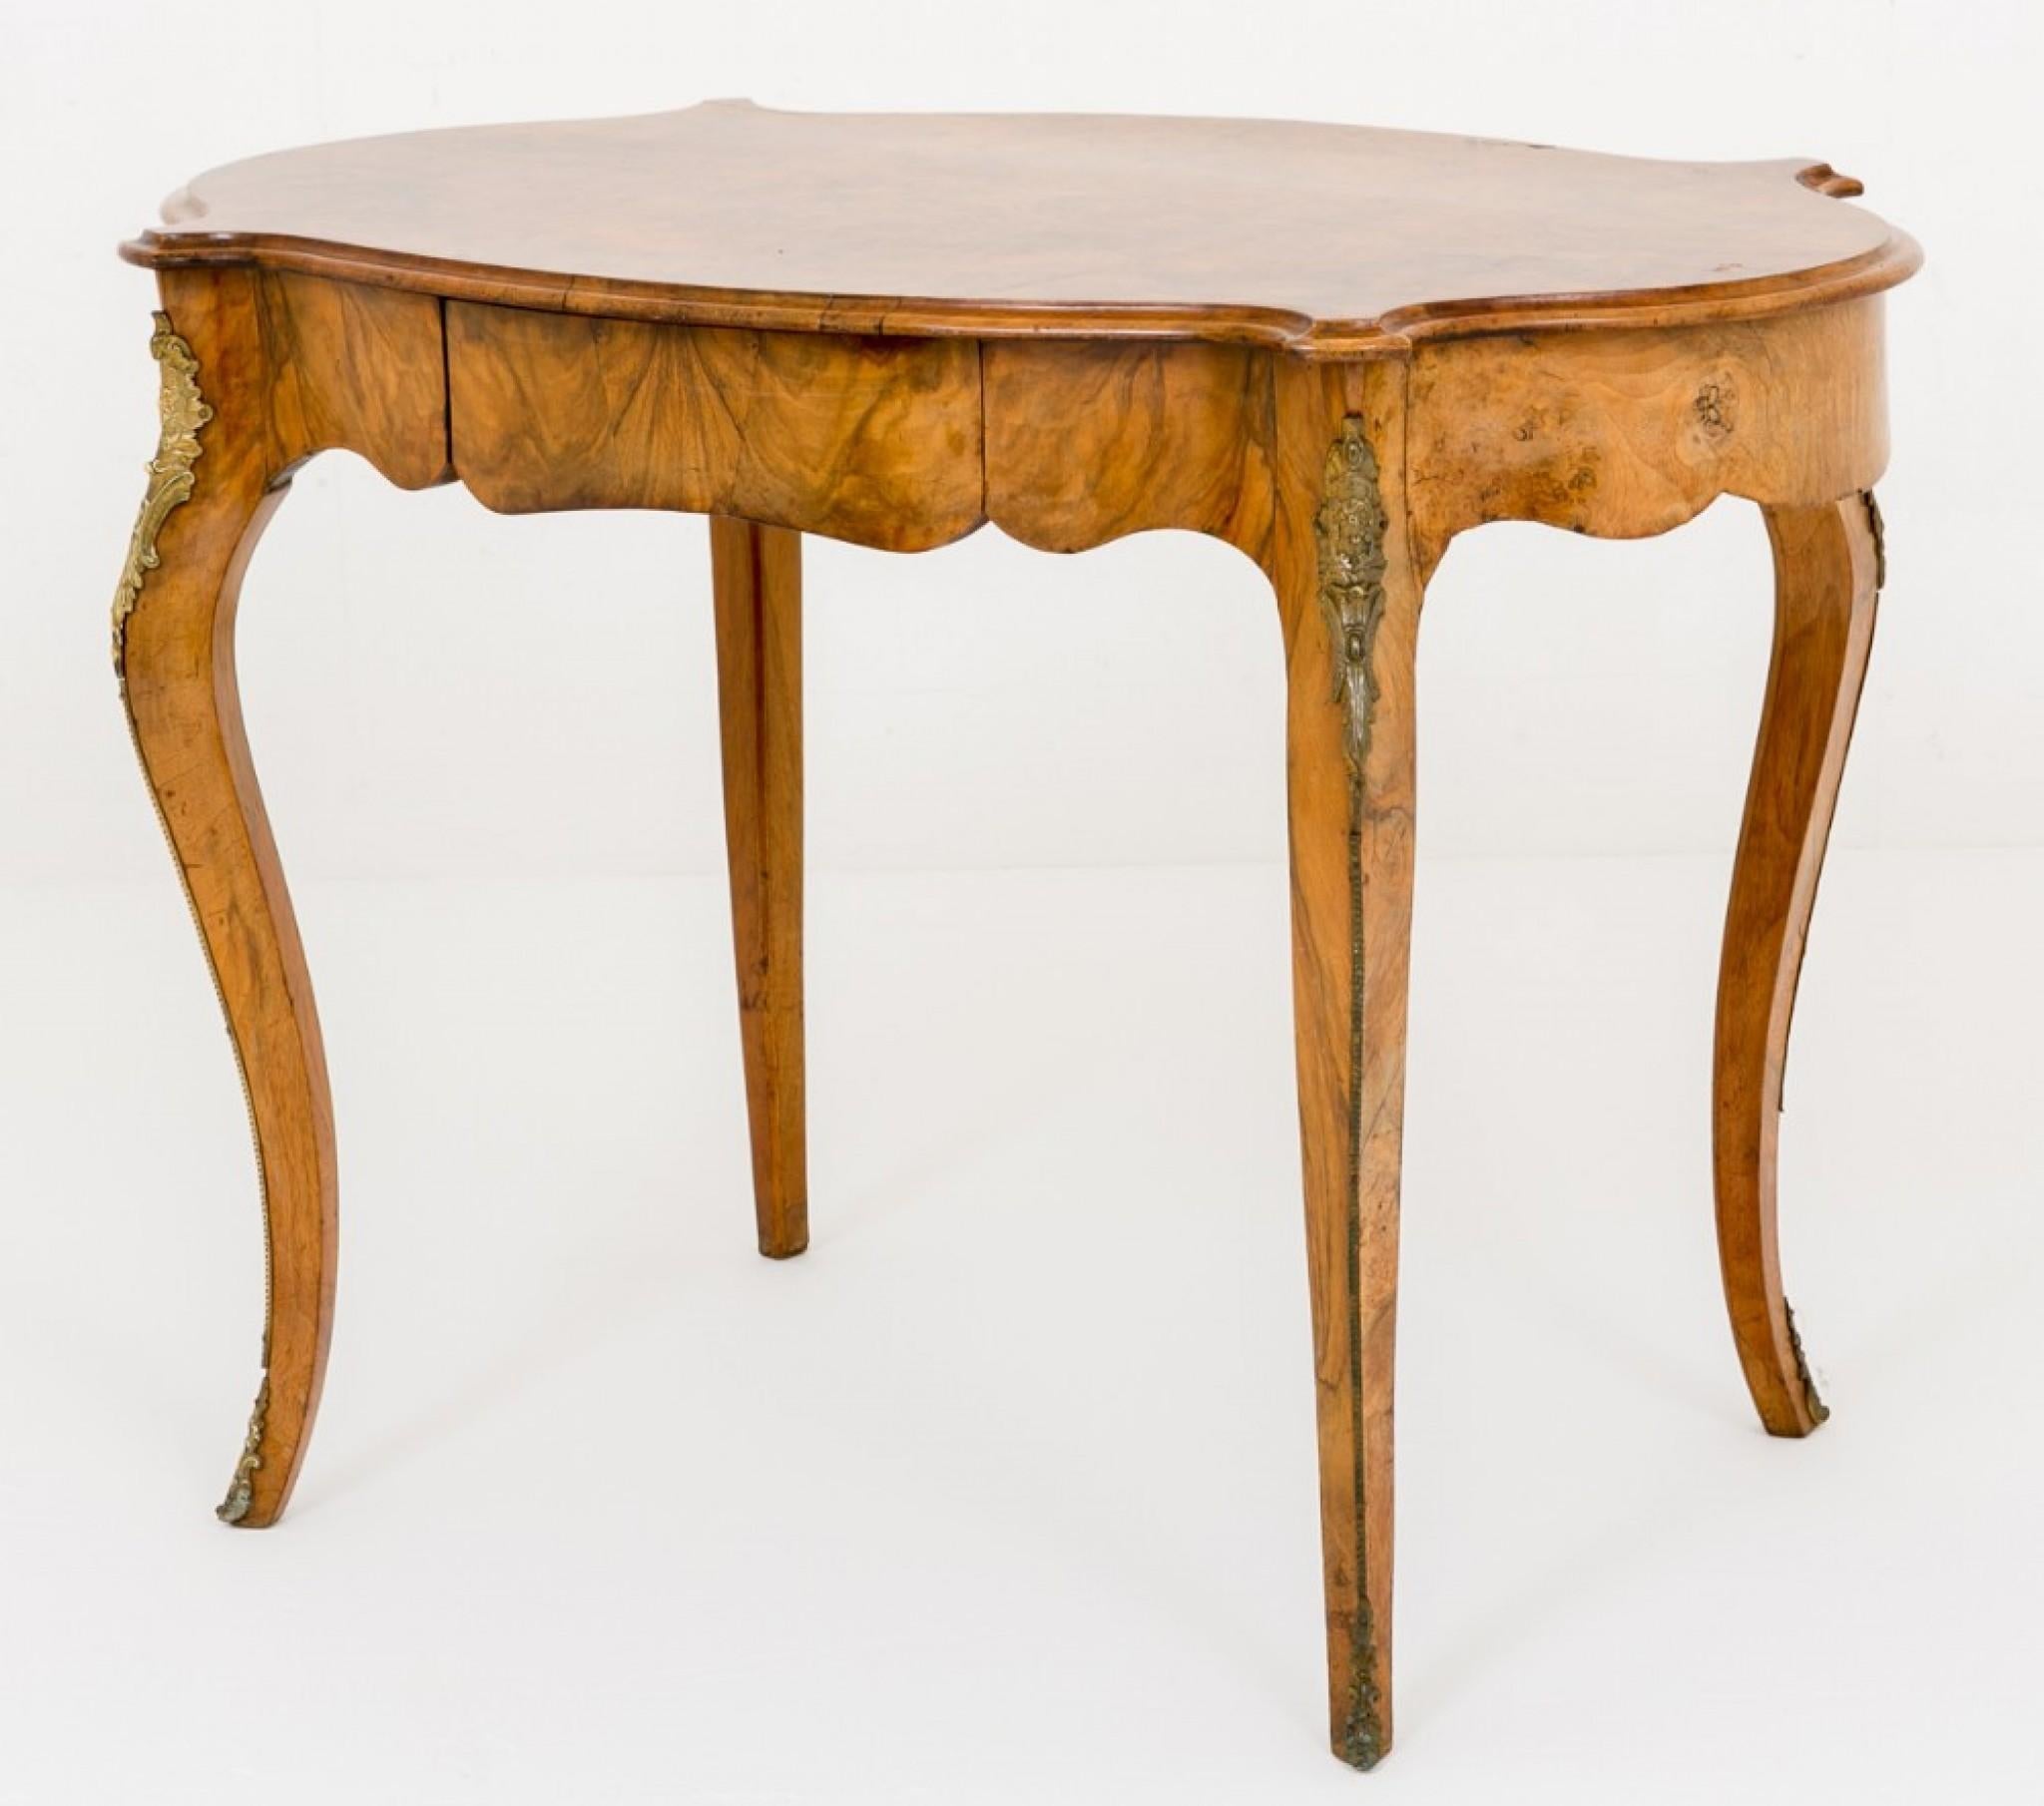 French Empire Centre Table Burr Walnut circa 1860 For Sale 5